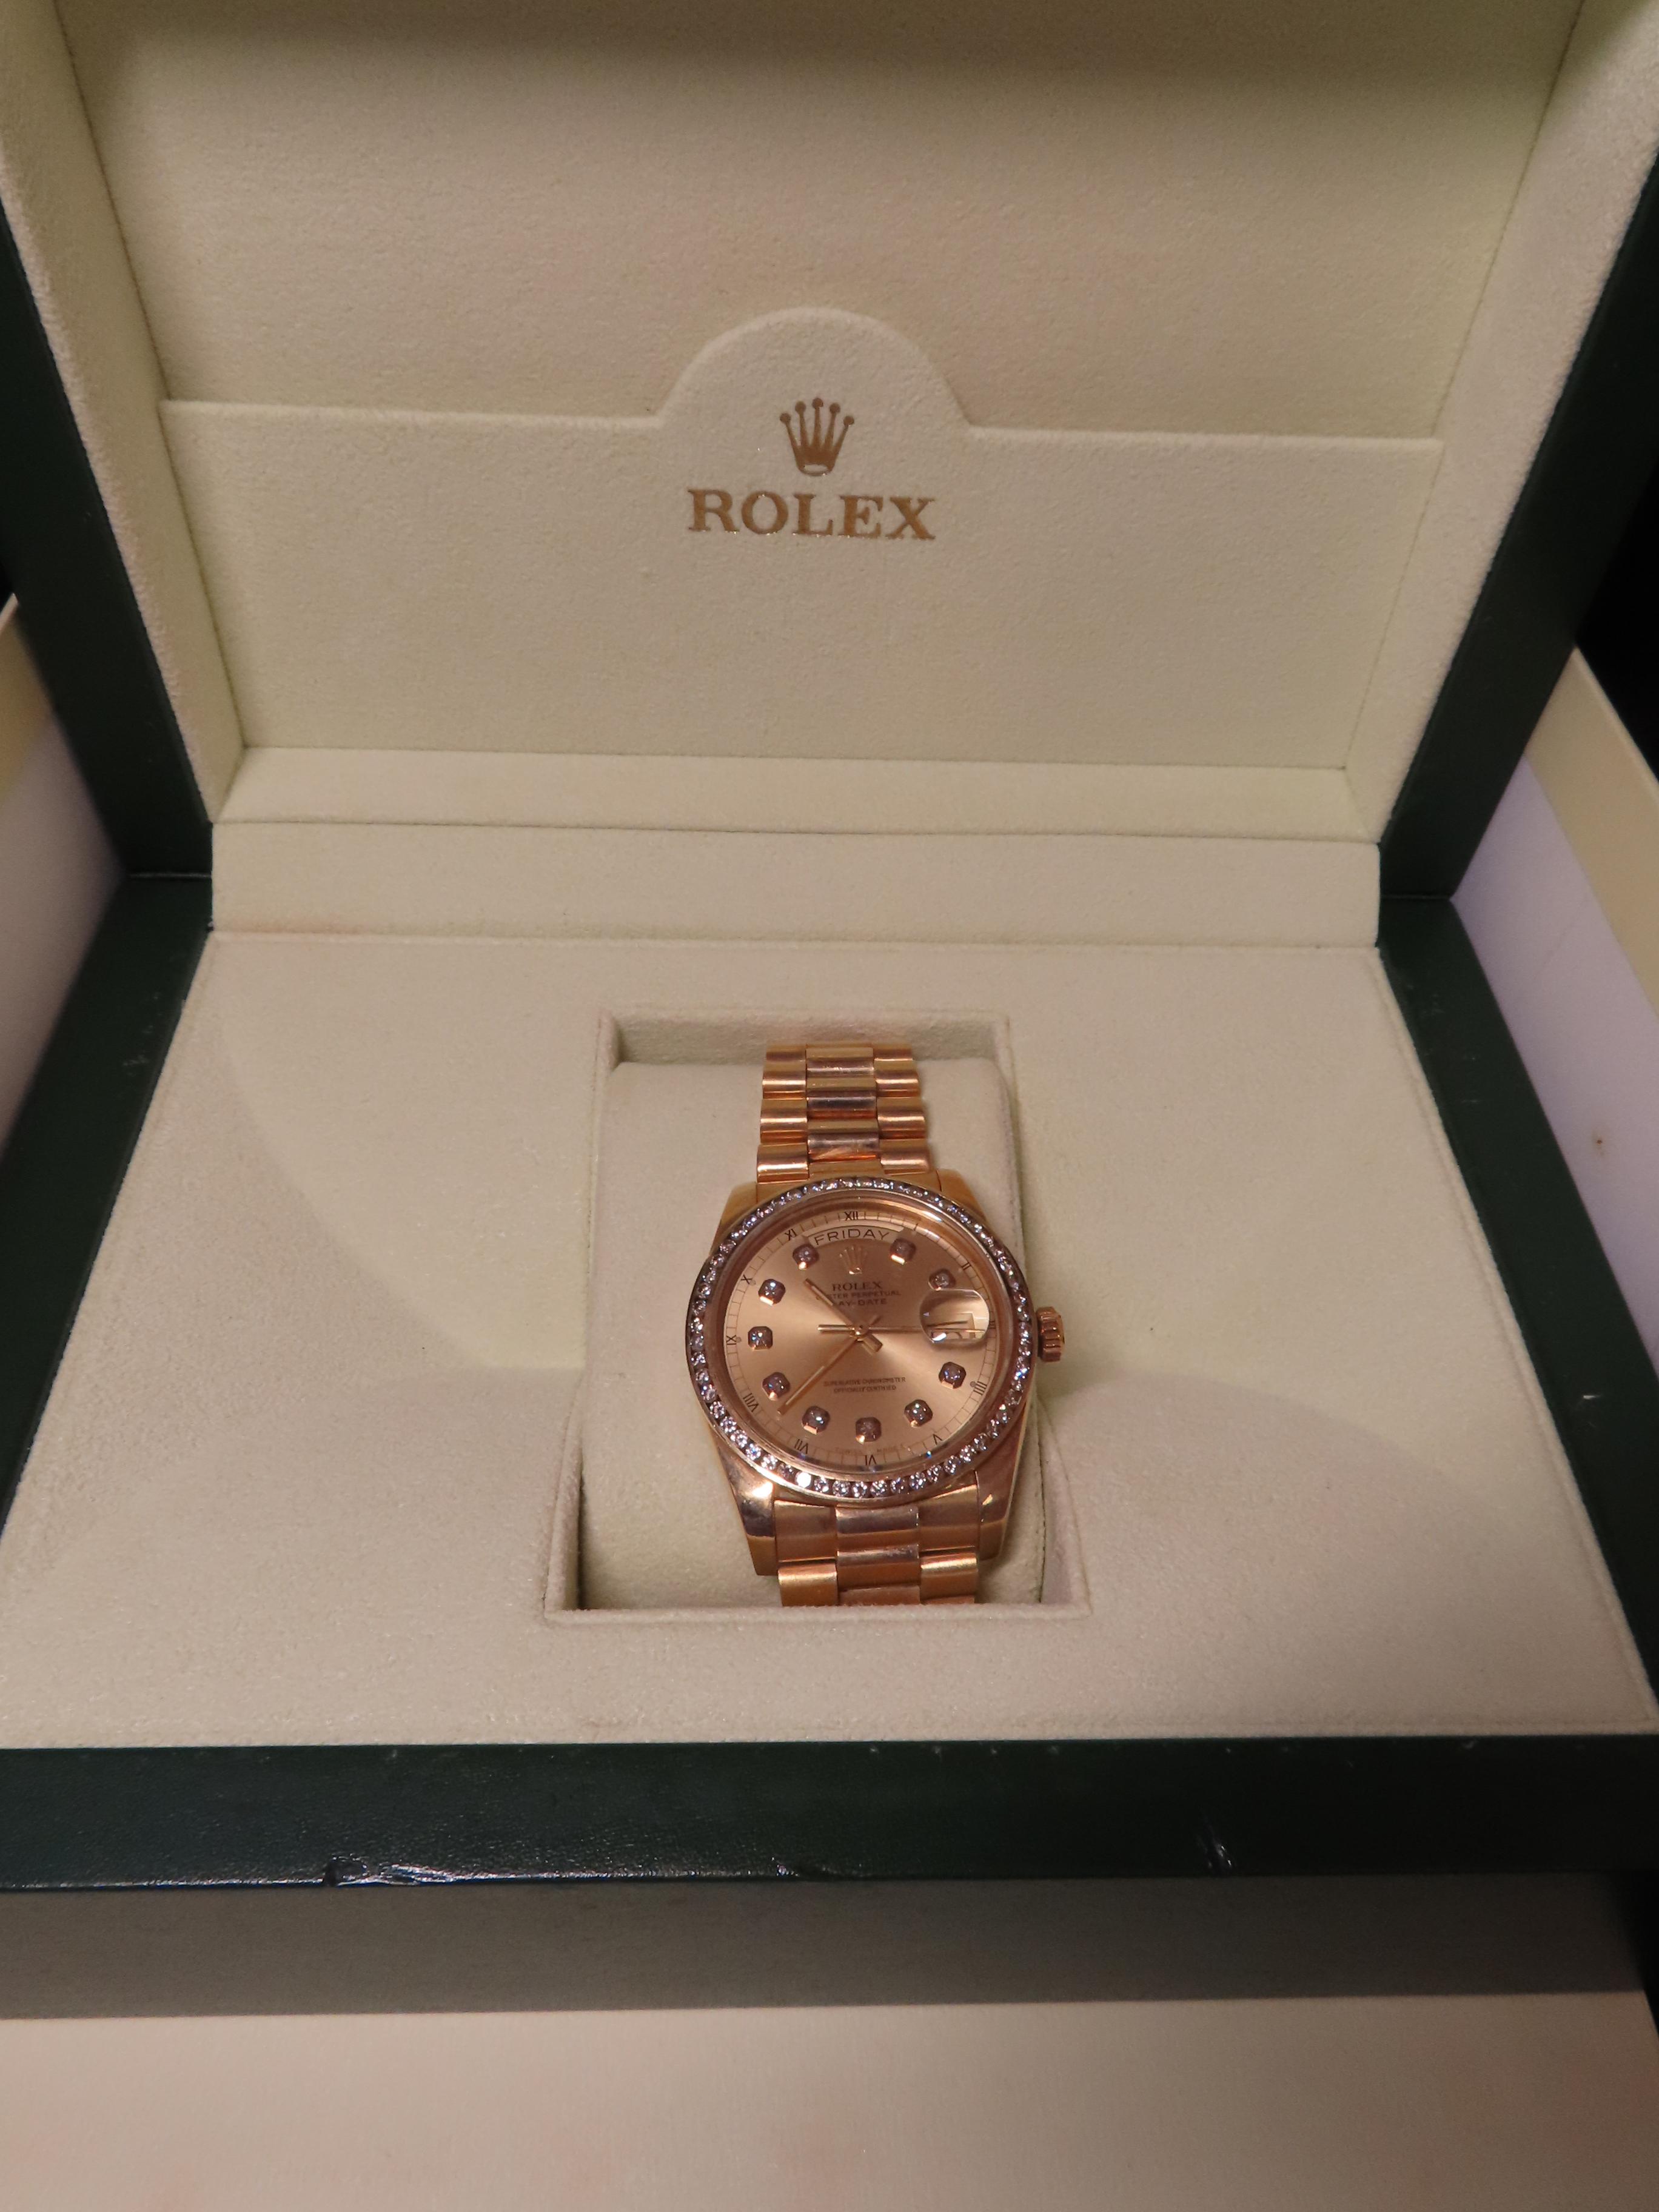 Gents Rolex 18KT Gold DayDate The President Wristwatch, Retail Value $23,000